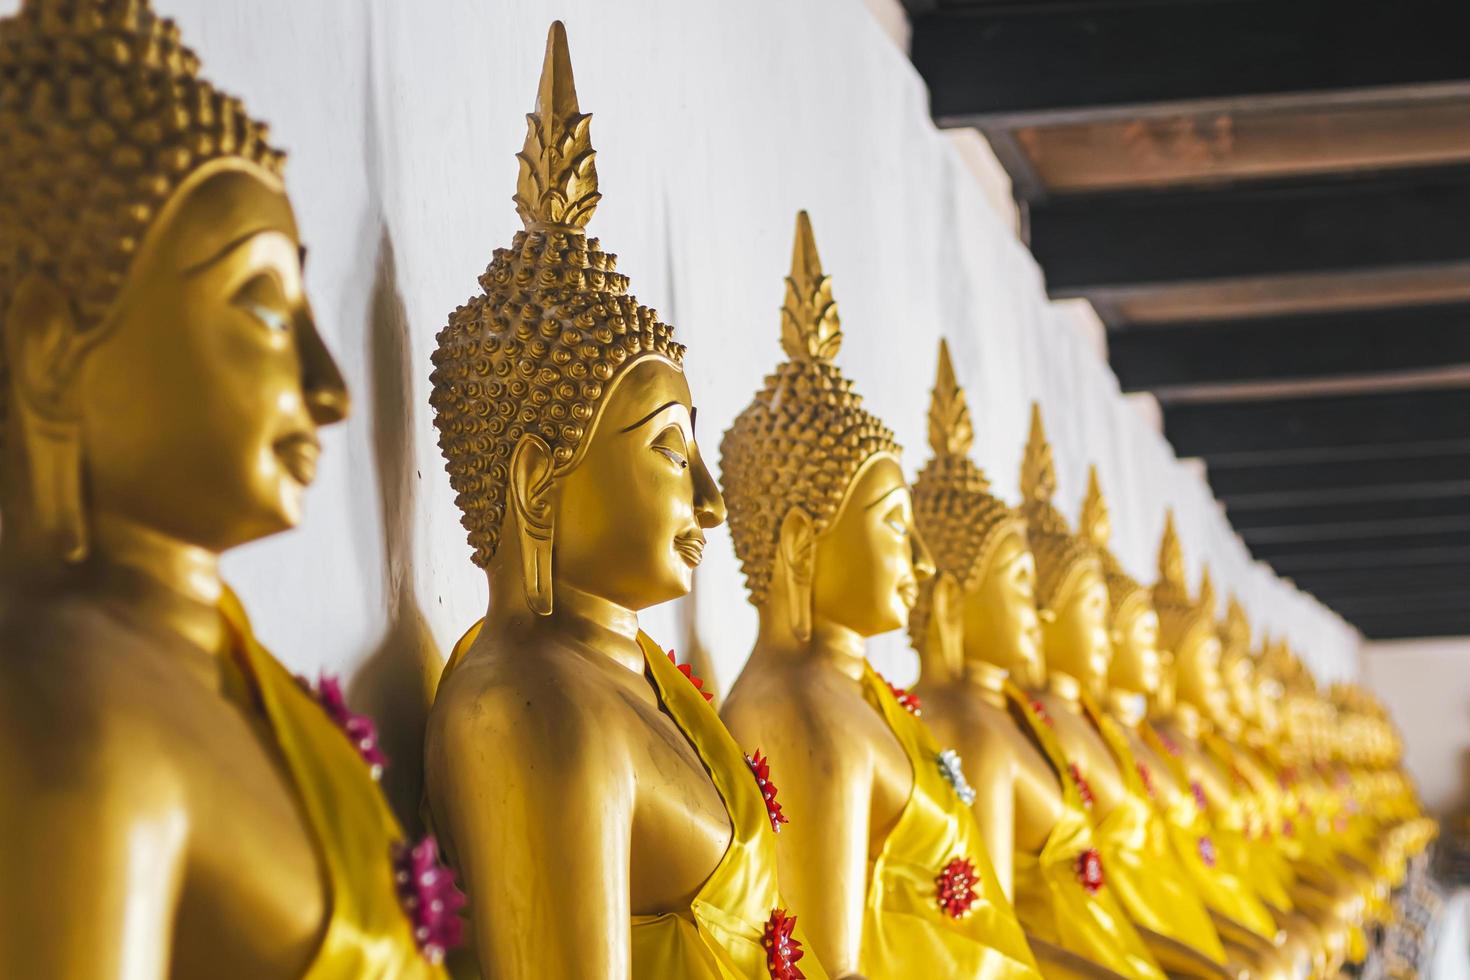 Samphao Lom, Thaïlande, 2020 - Rangée de statues de Bouddha photo